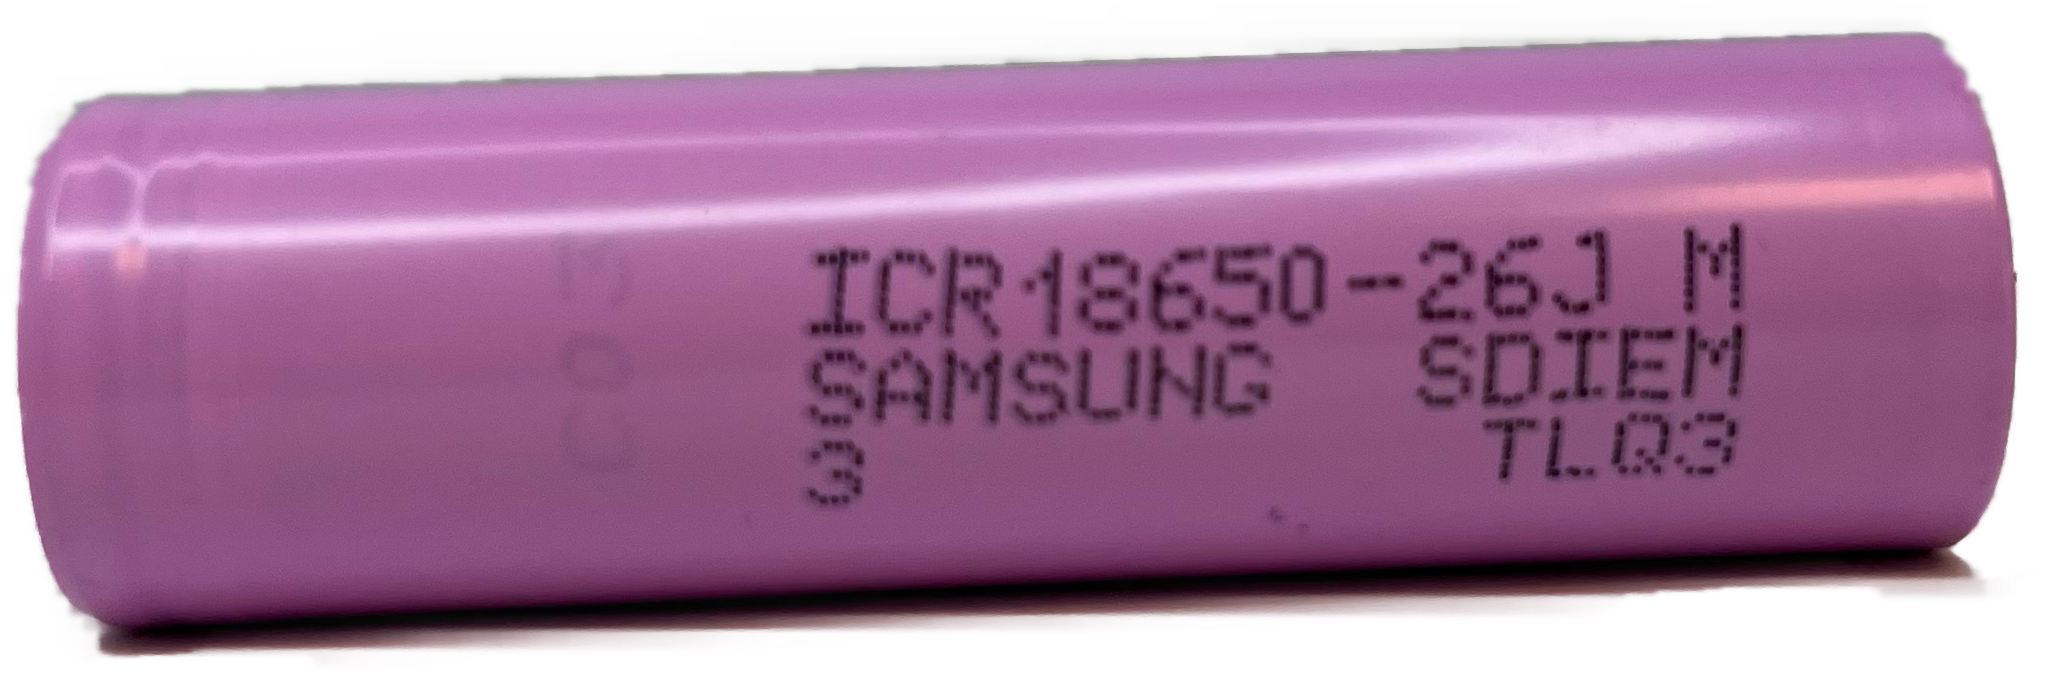 Samsung ICR18650 2600mAh 26J - unprotected flat top